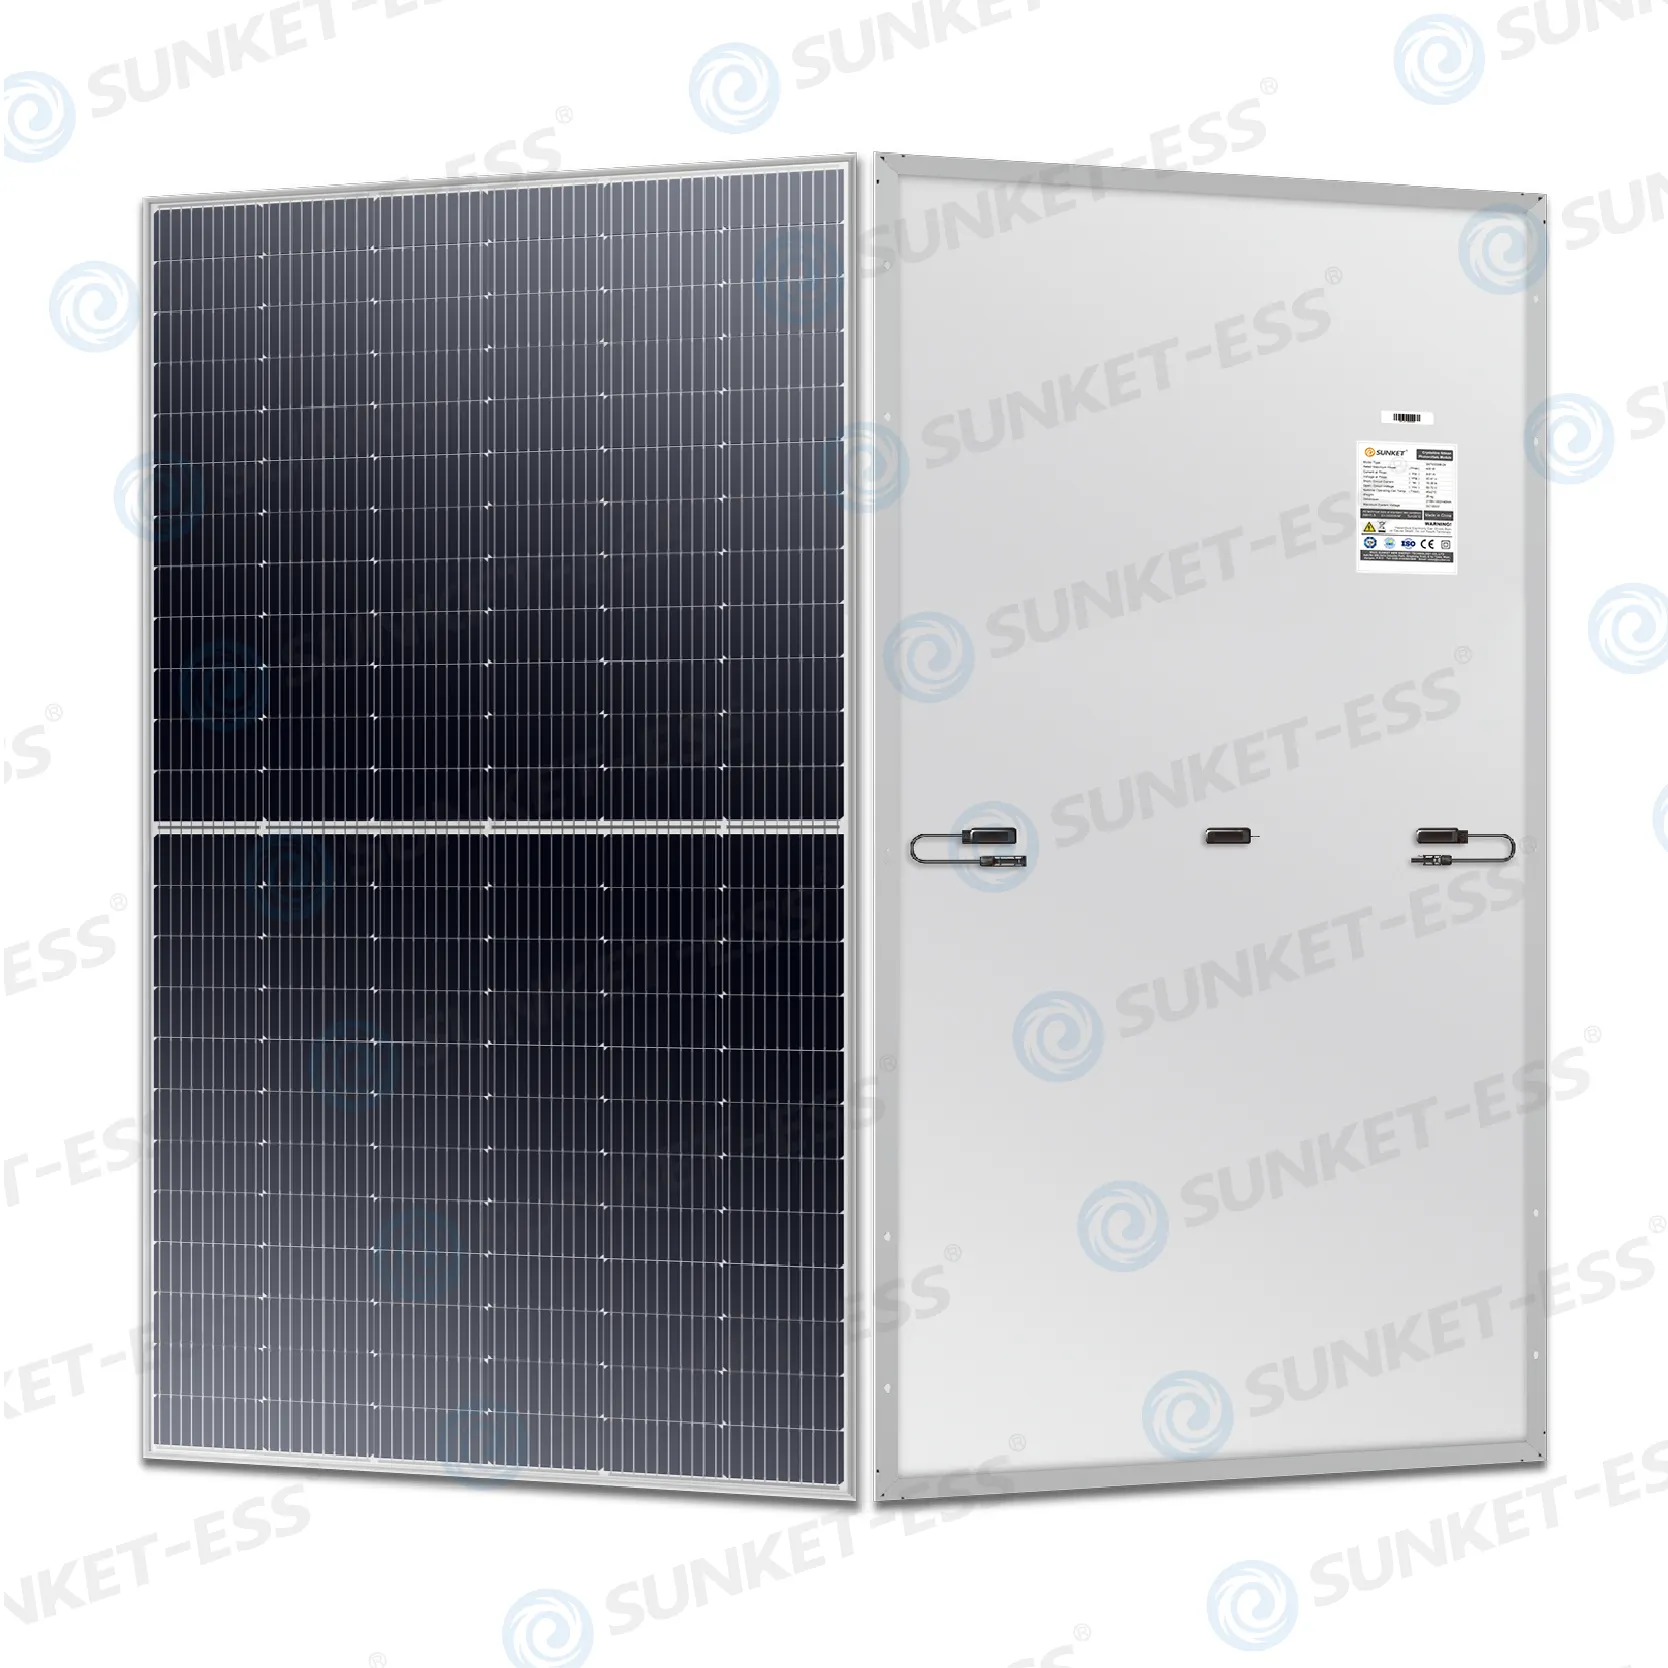 Lengkap Solar Hybrid Komposit Solaranlage Insel 10KVA Panel Surya 10 Kw 665W untuk Rumah 10 Kw